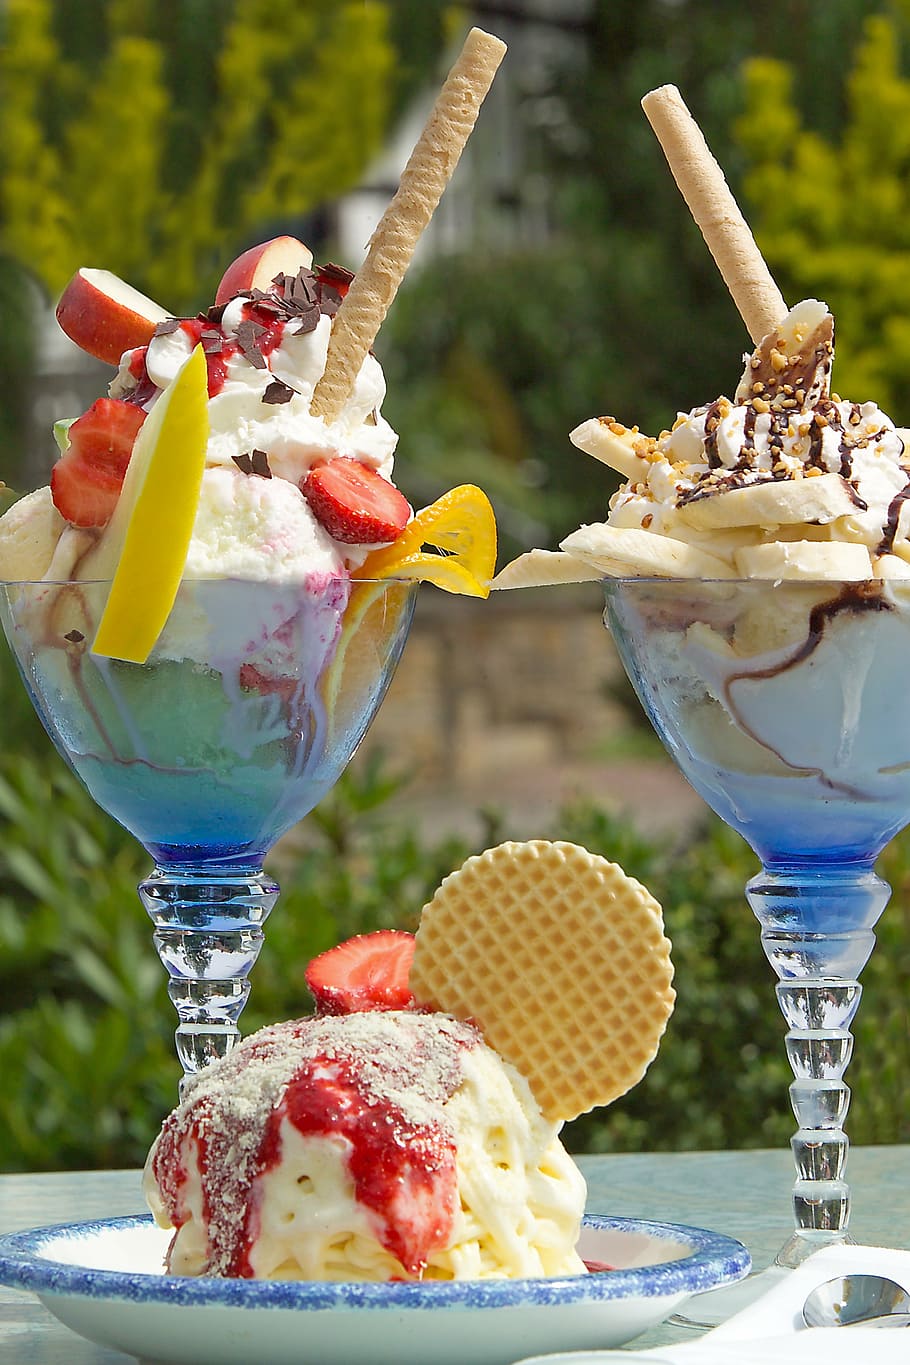 two ice cream scoops, ice cream sundae, sweet dish, waffle, dessert